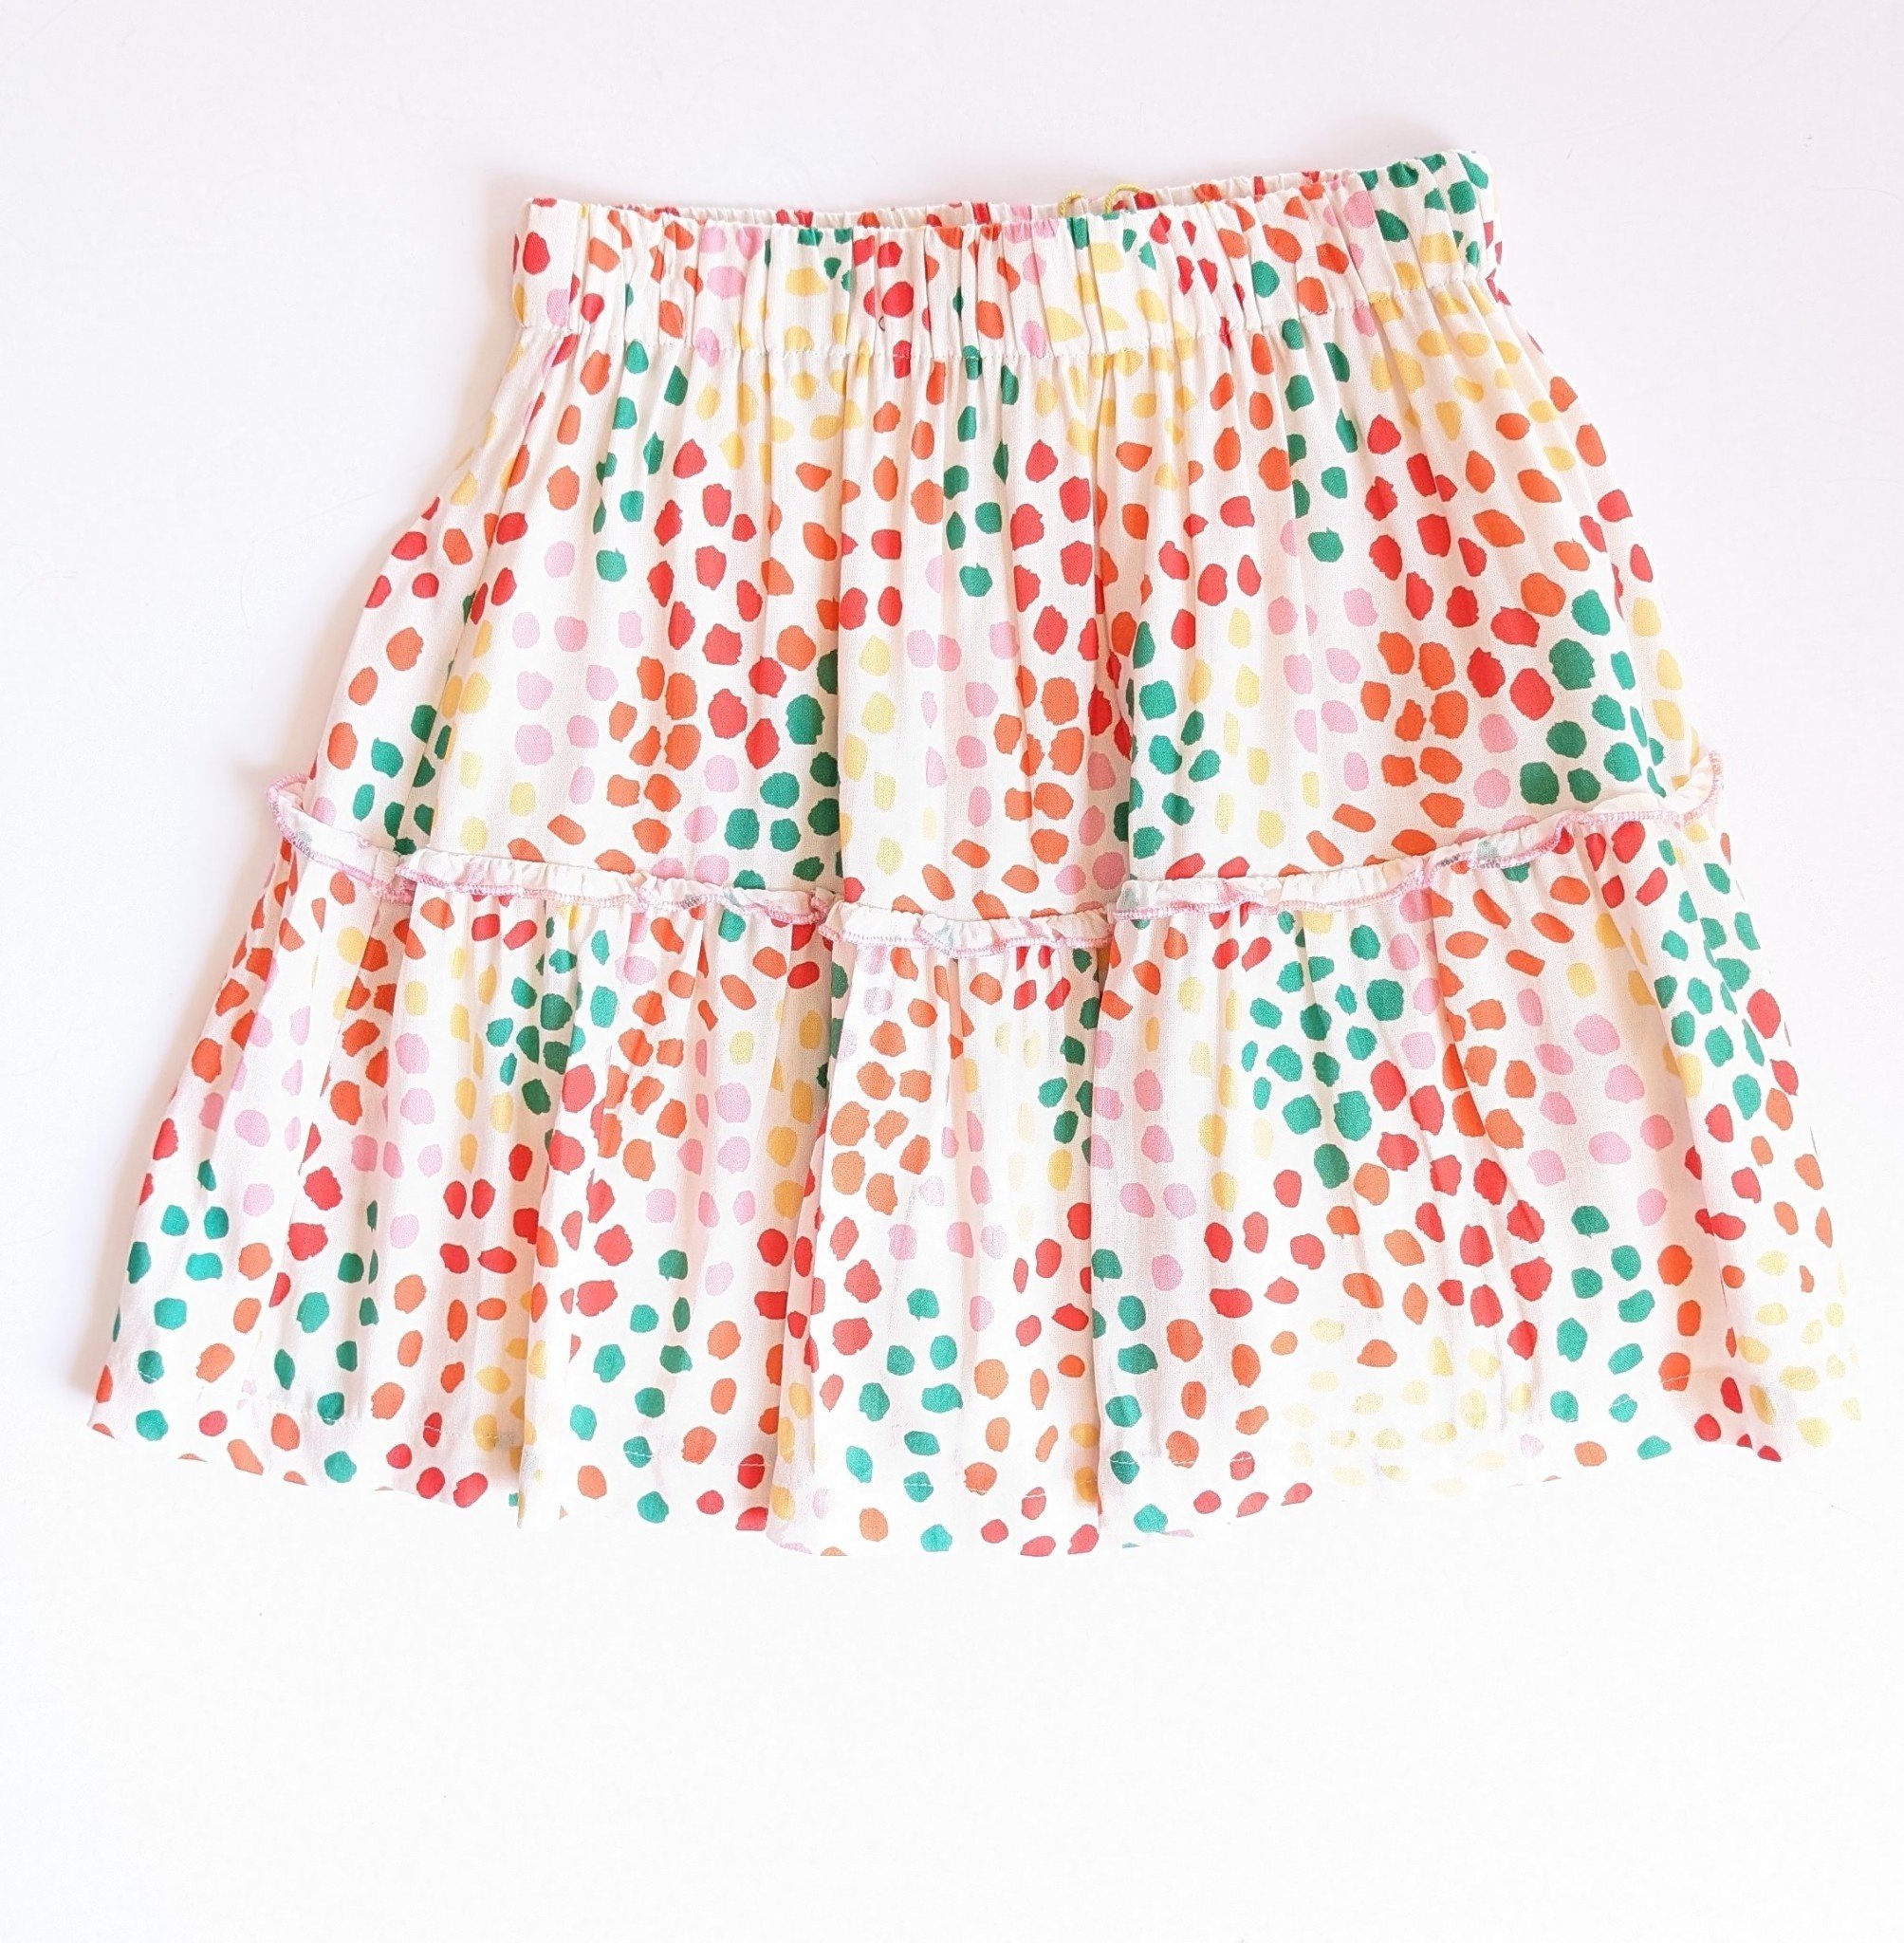 Compania Fantastica Multi Color Dot Skirt